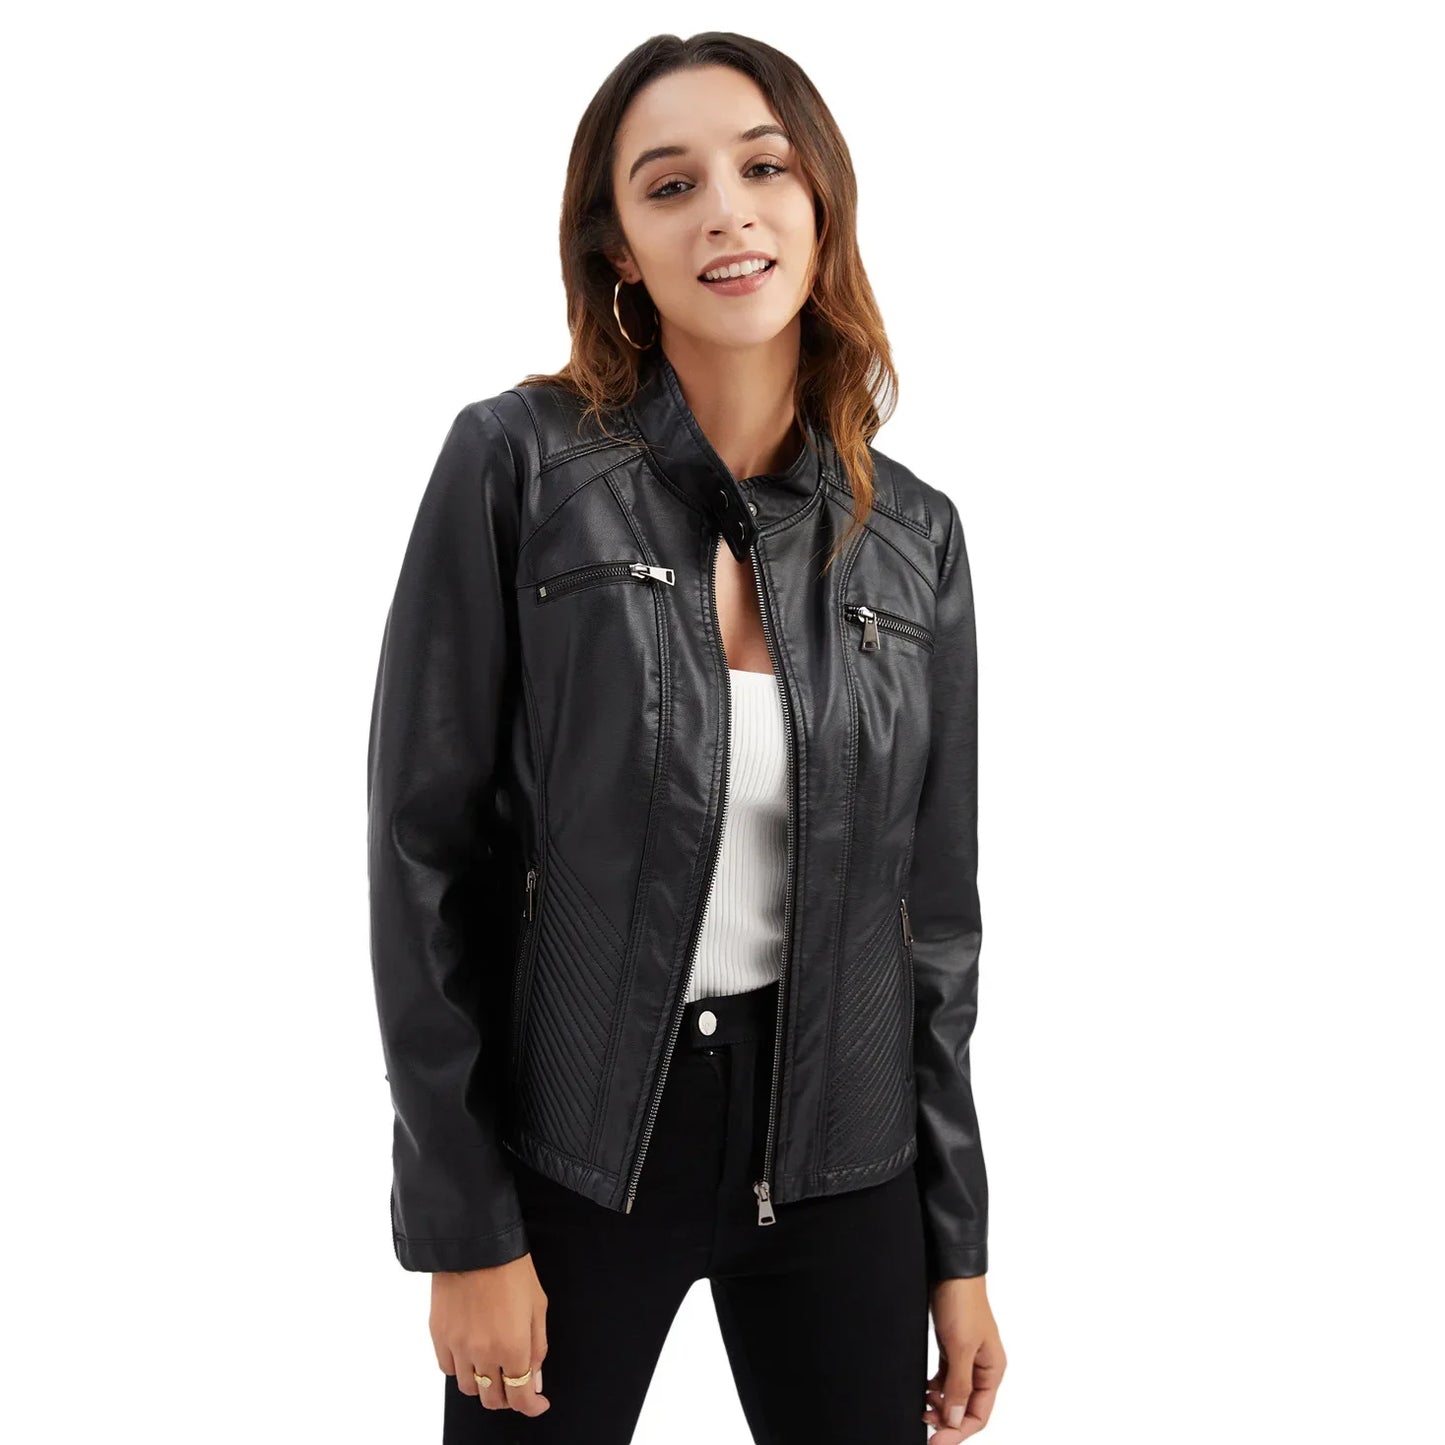 Women's PU Leather Jacket